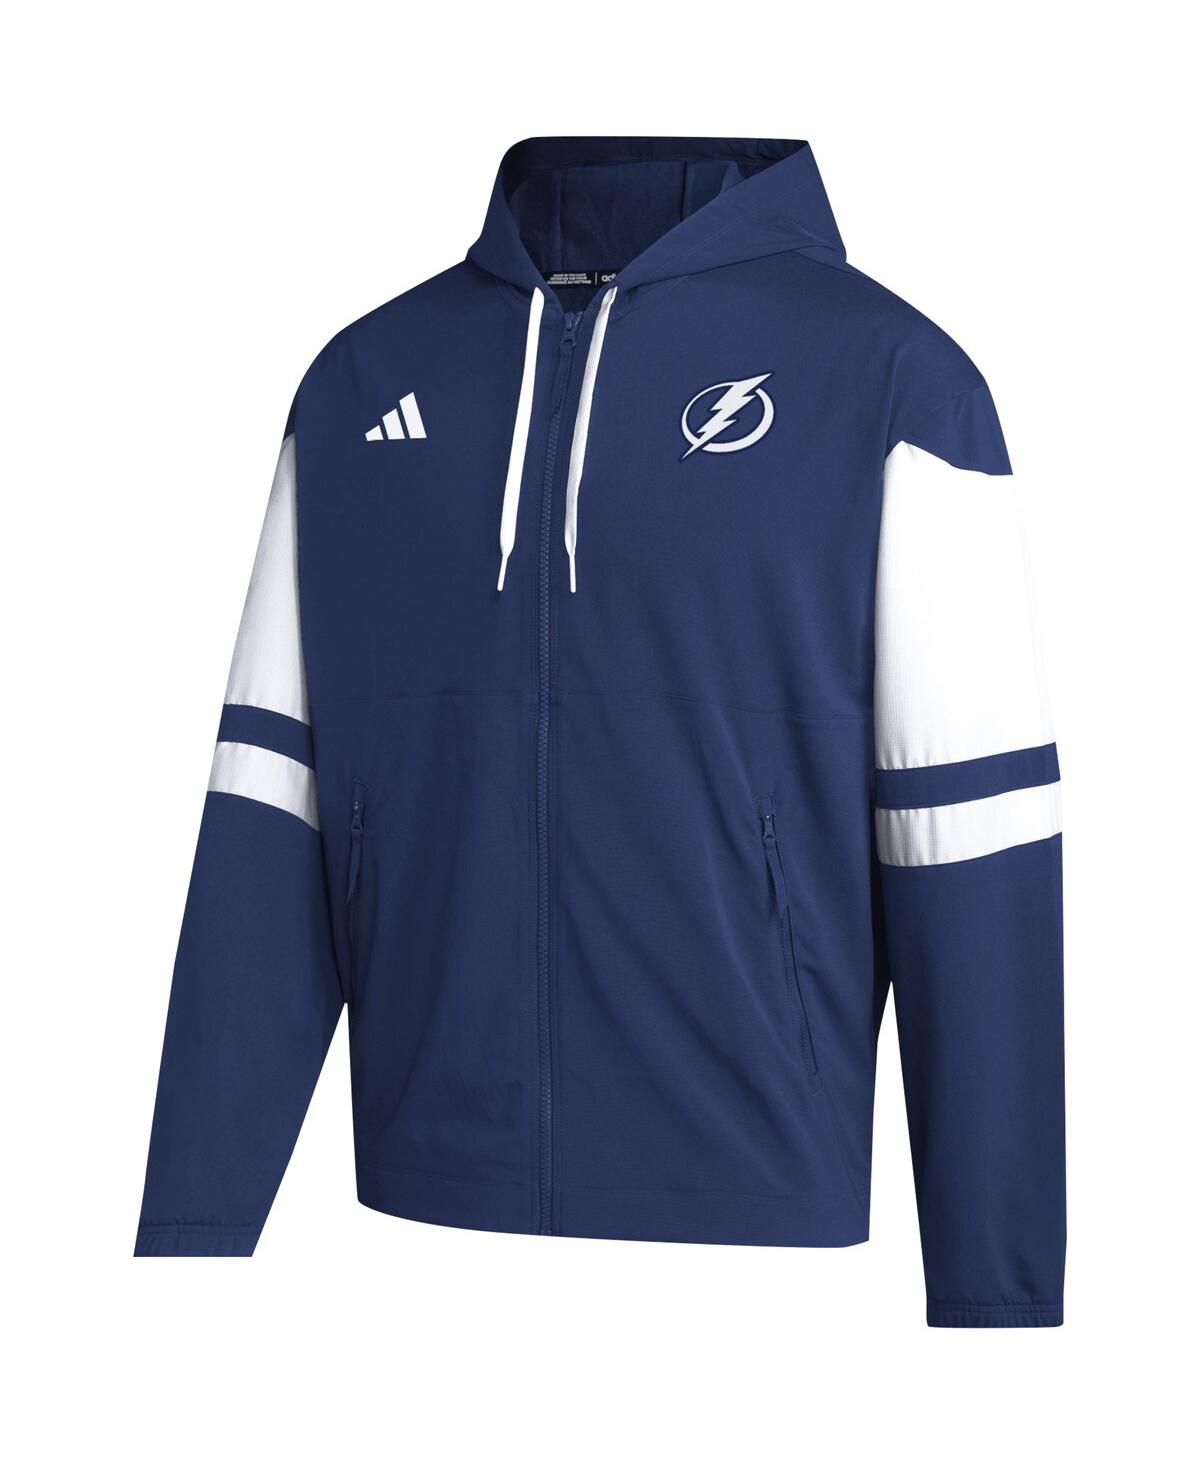 Shop Adidas Originals Men's Adidas Blue Tampa Bay Lightning Full-zip Hoodie